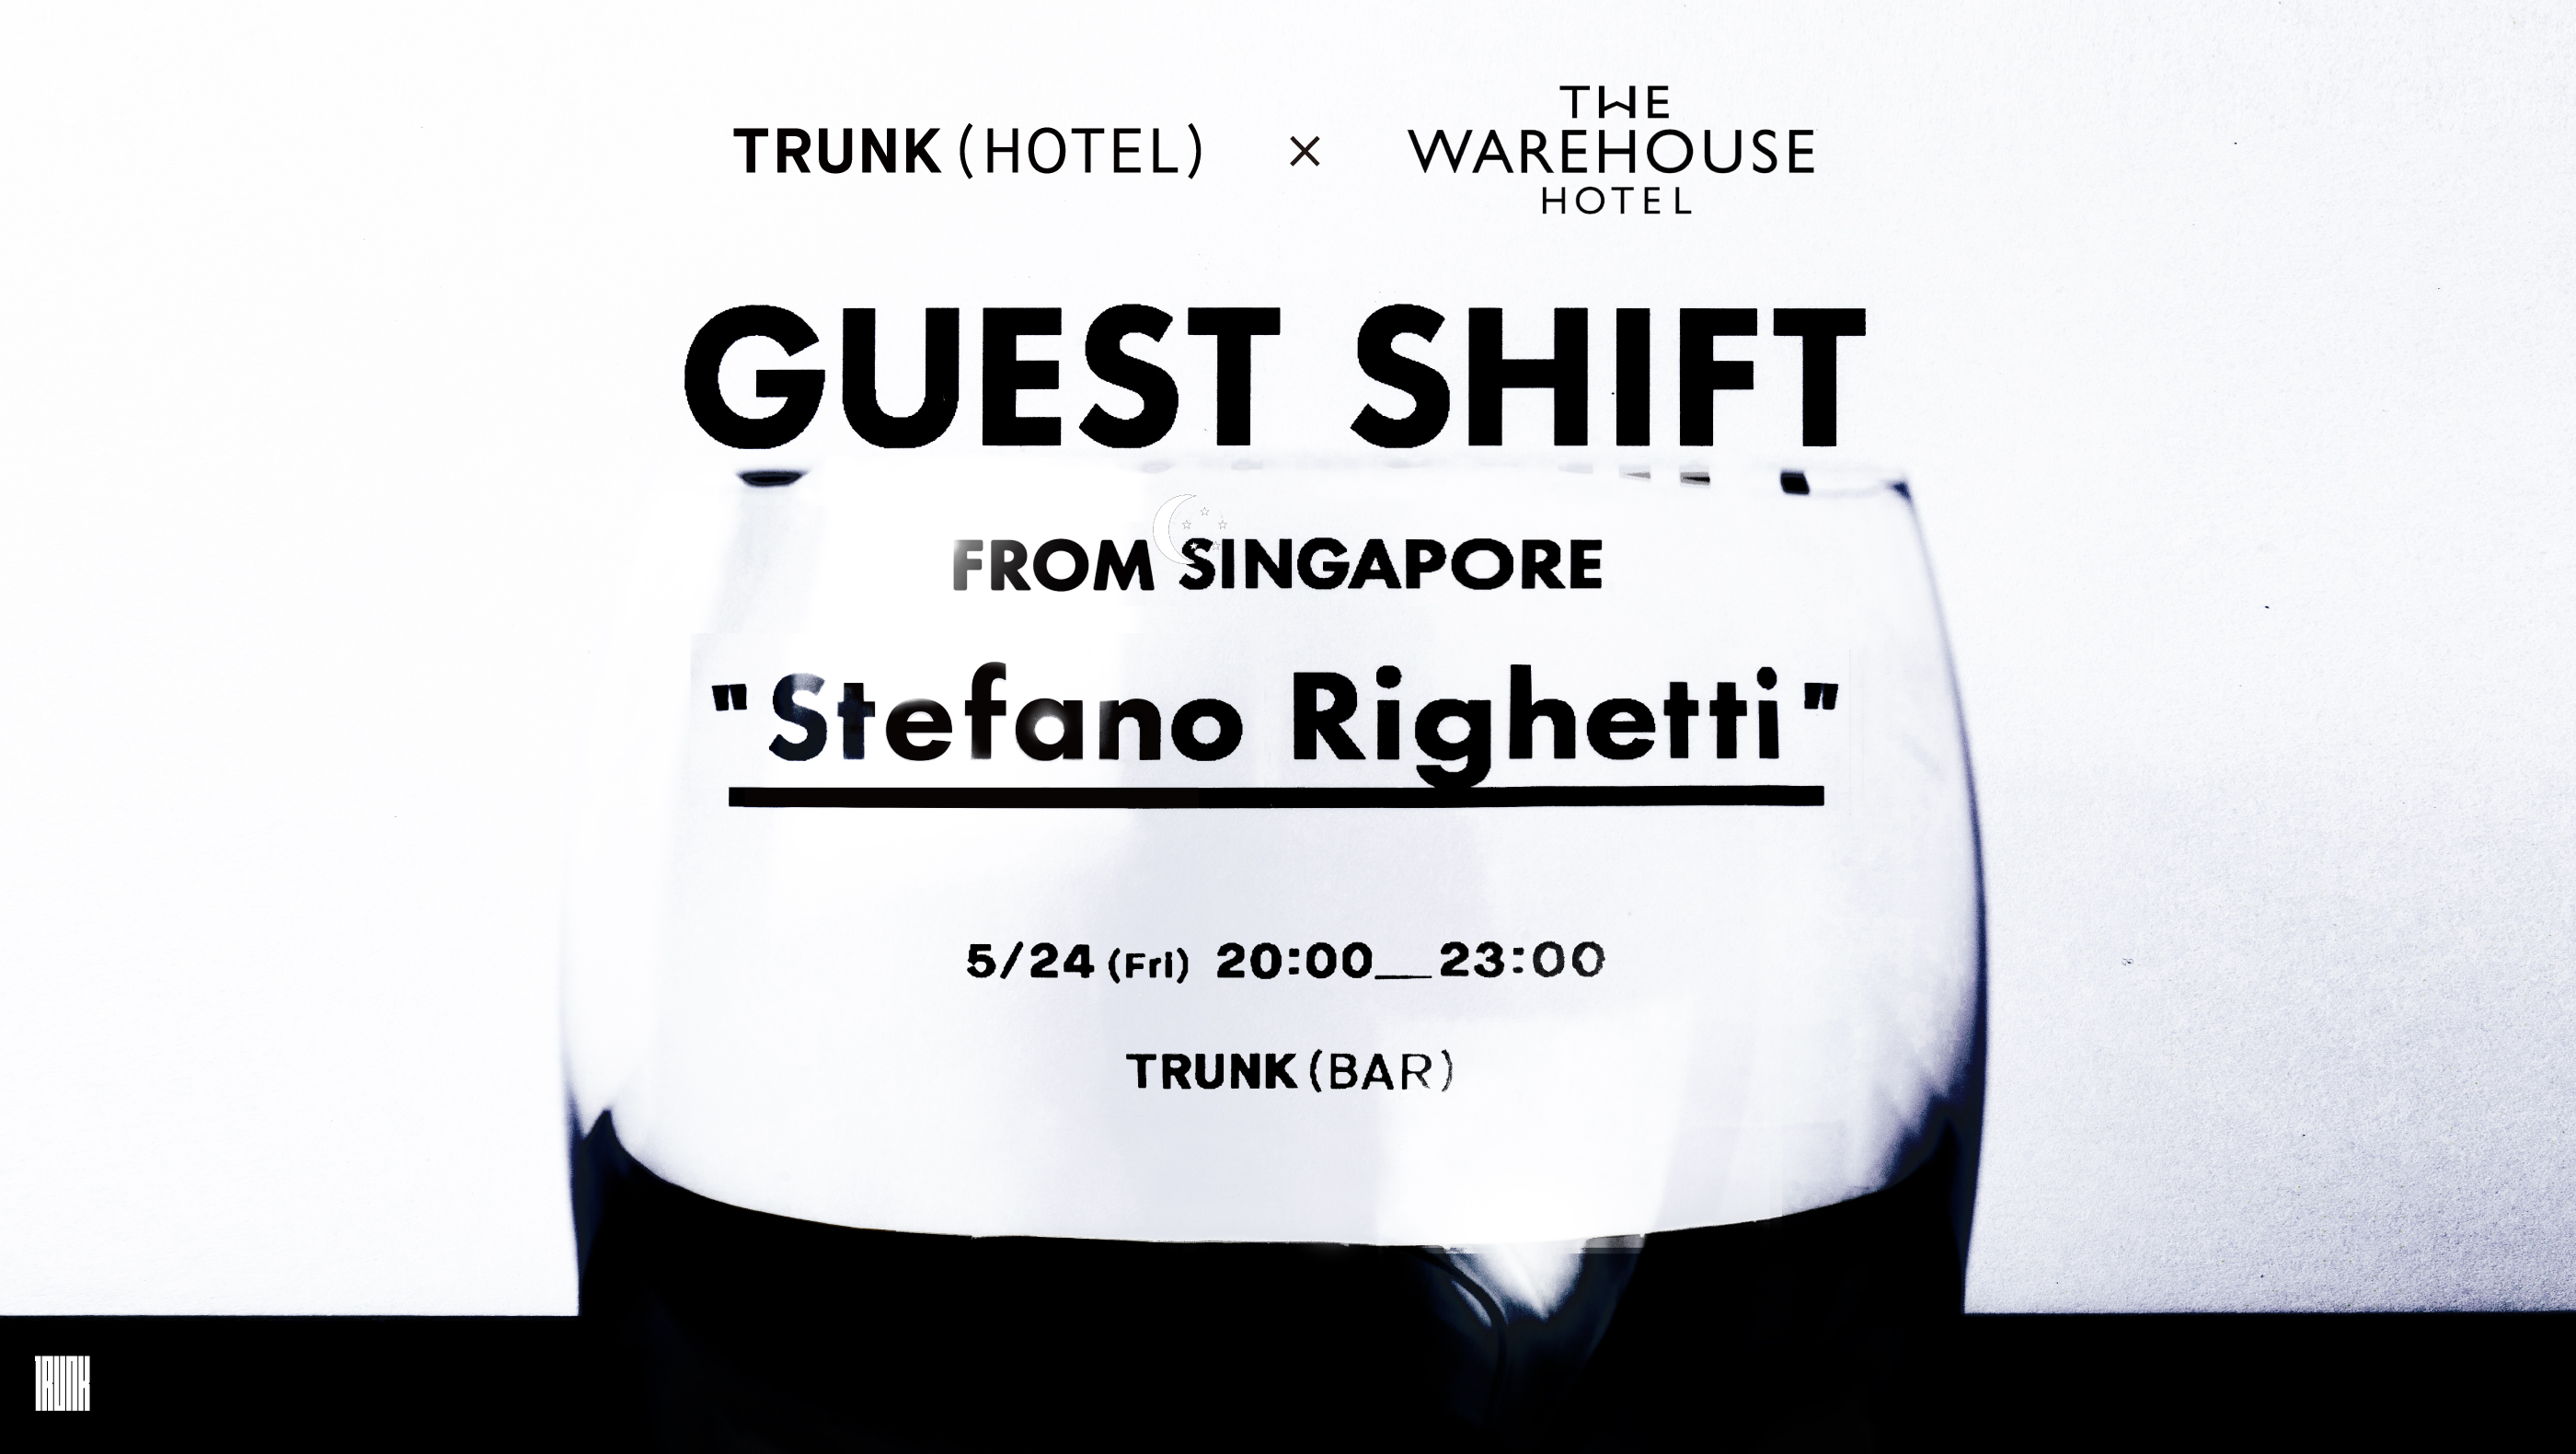 Guest Shift from Singapore "Stefano Righetti"